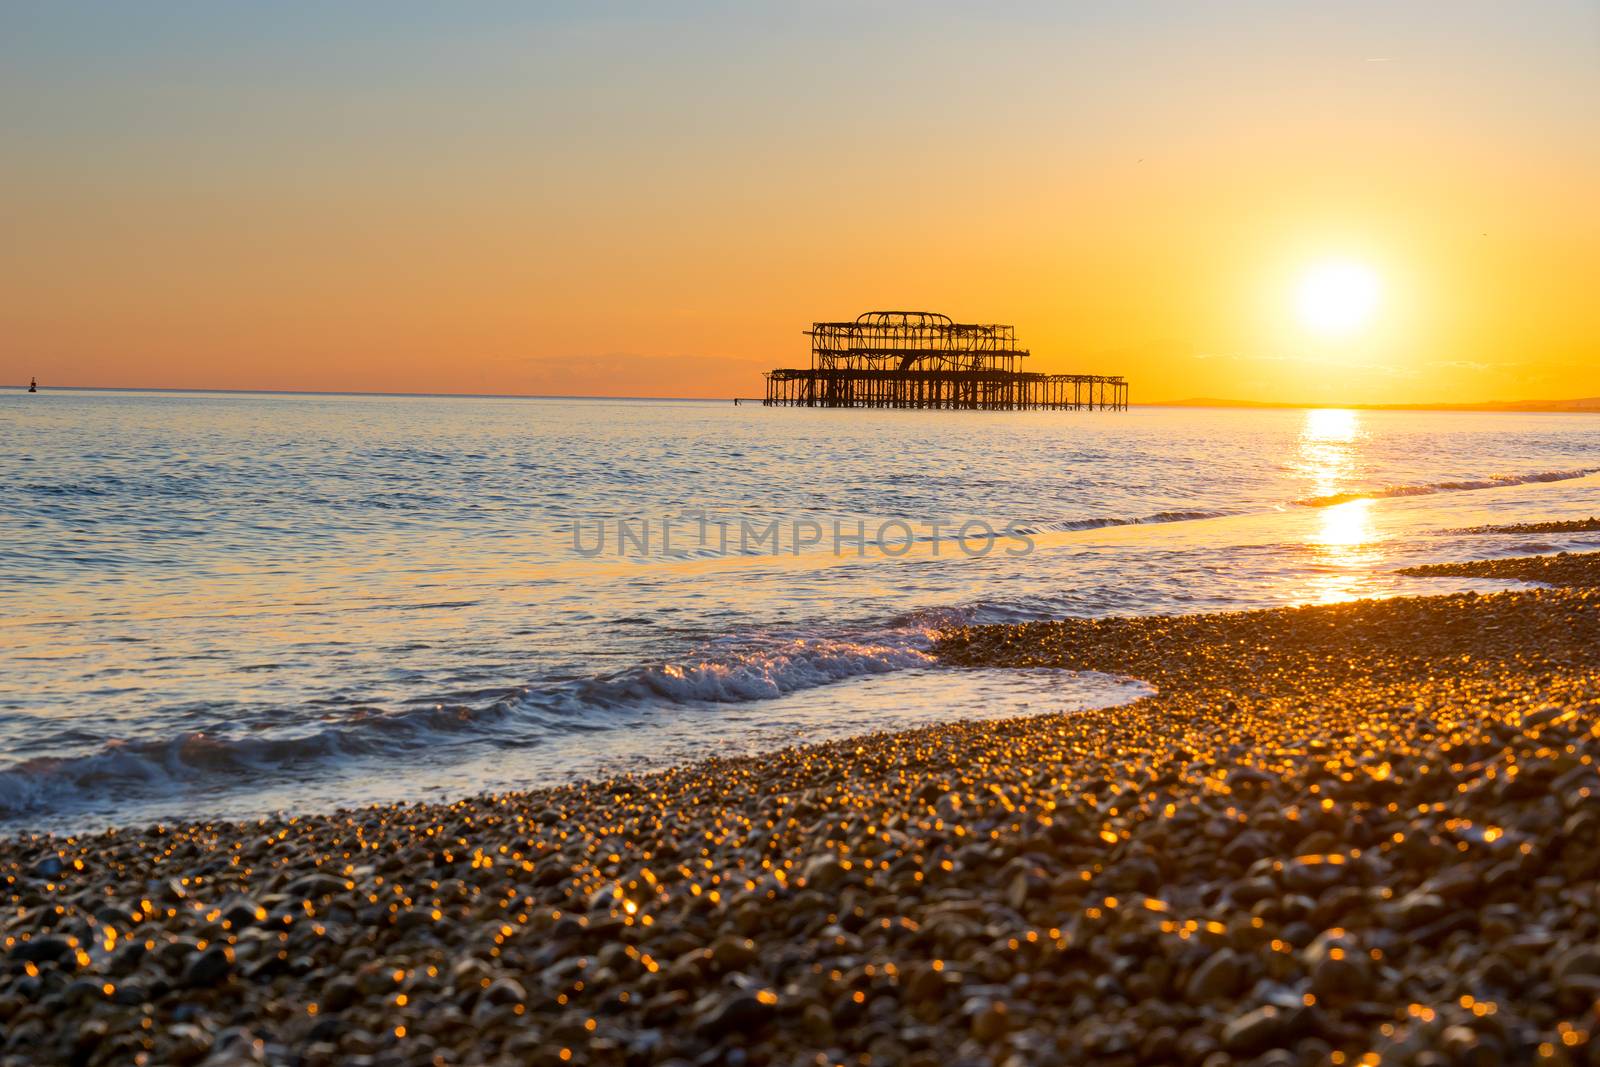 Brighton pier and beach, England by Alicephoto